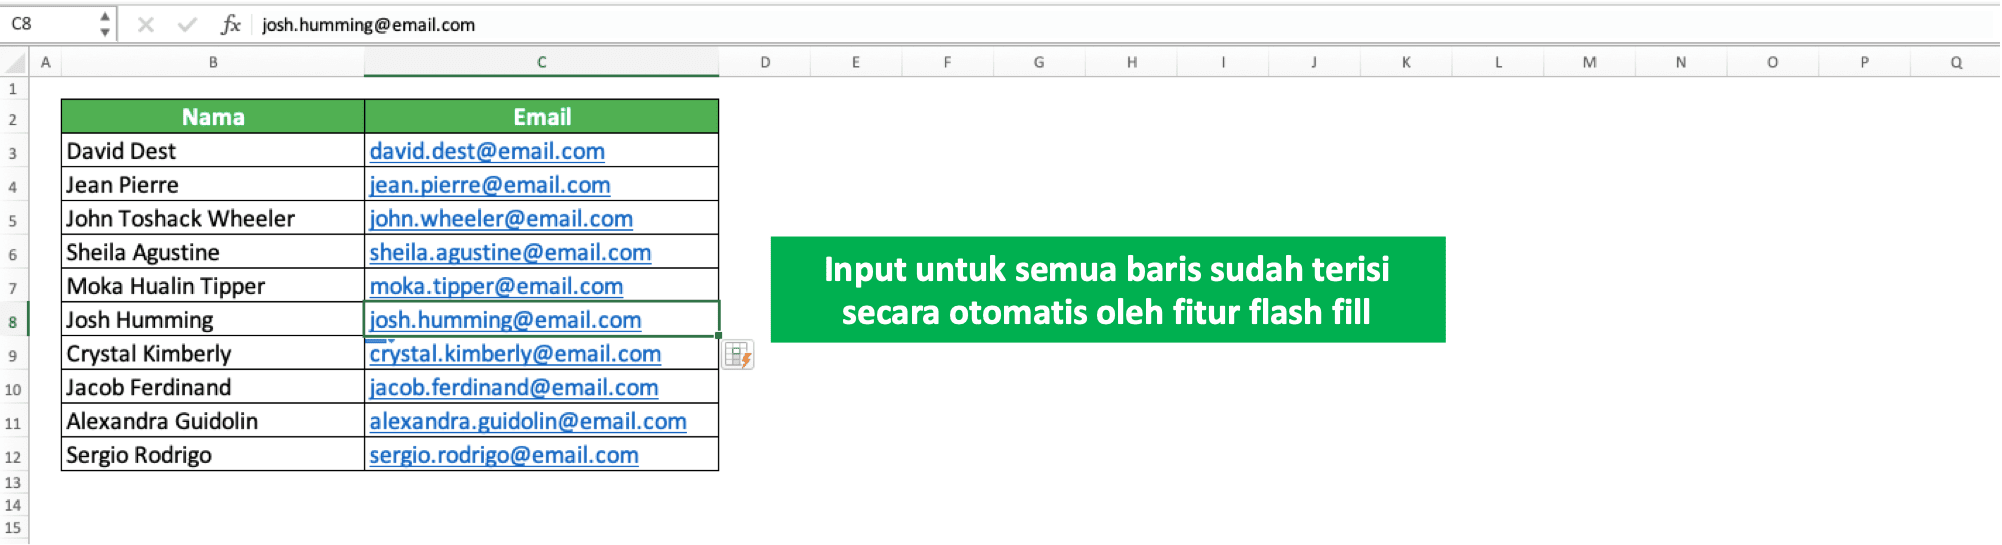 Cara Menggunakan dan Kegunaan/Fungsi Ctrl + E Pada Excel - Screenshot Contoh Hasil Penggunaan Flash Fill 2